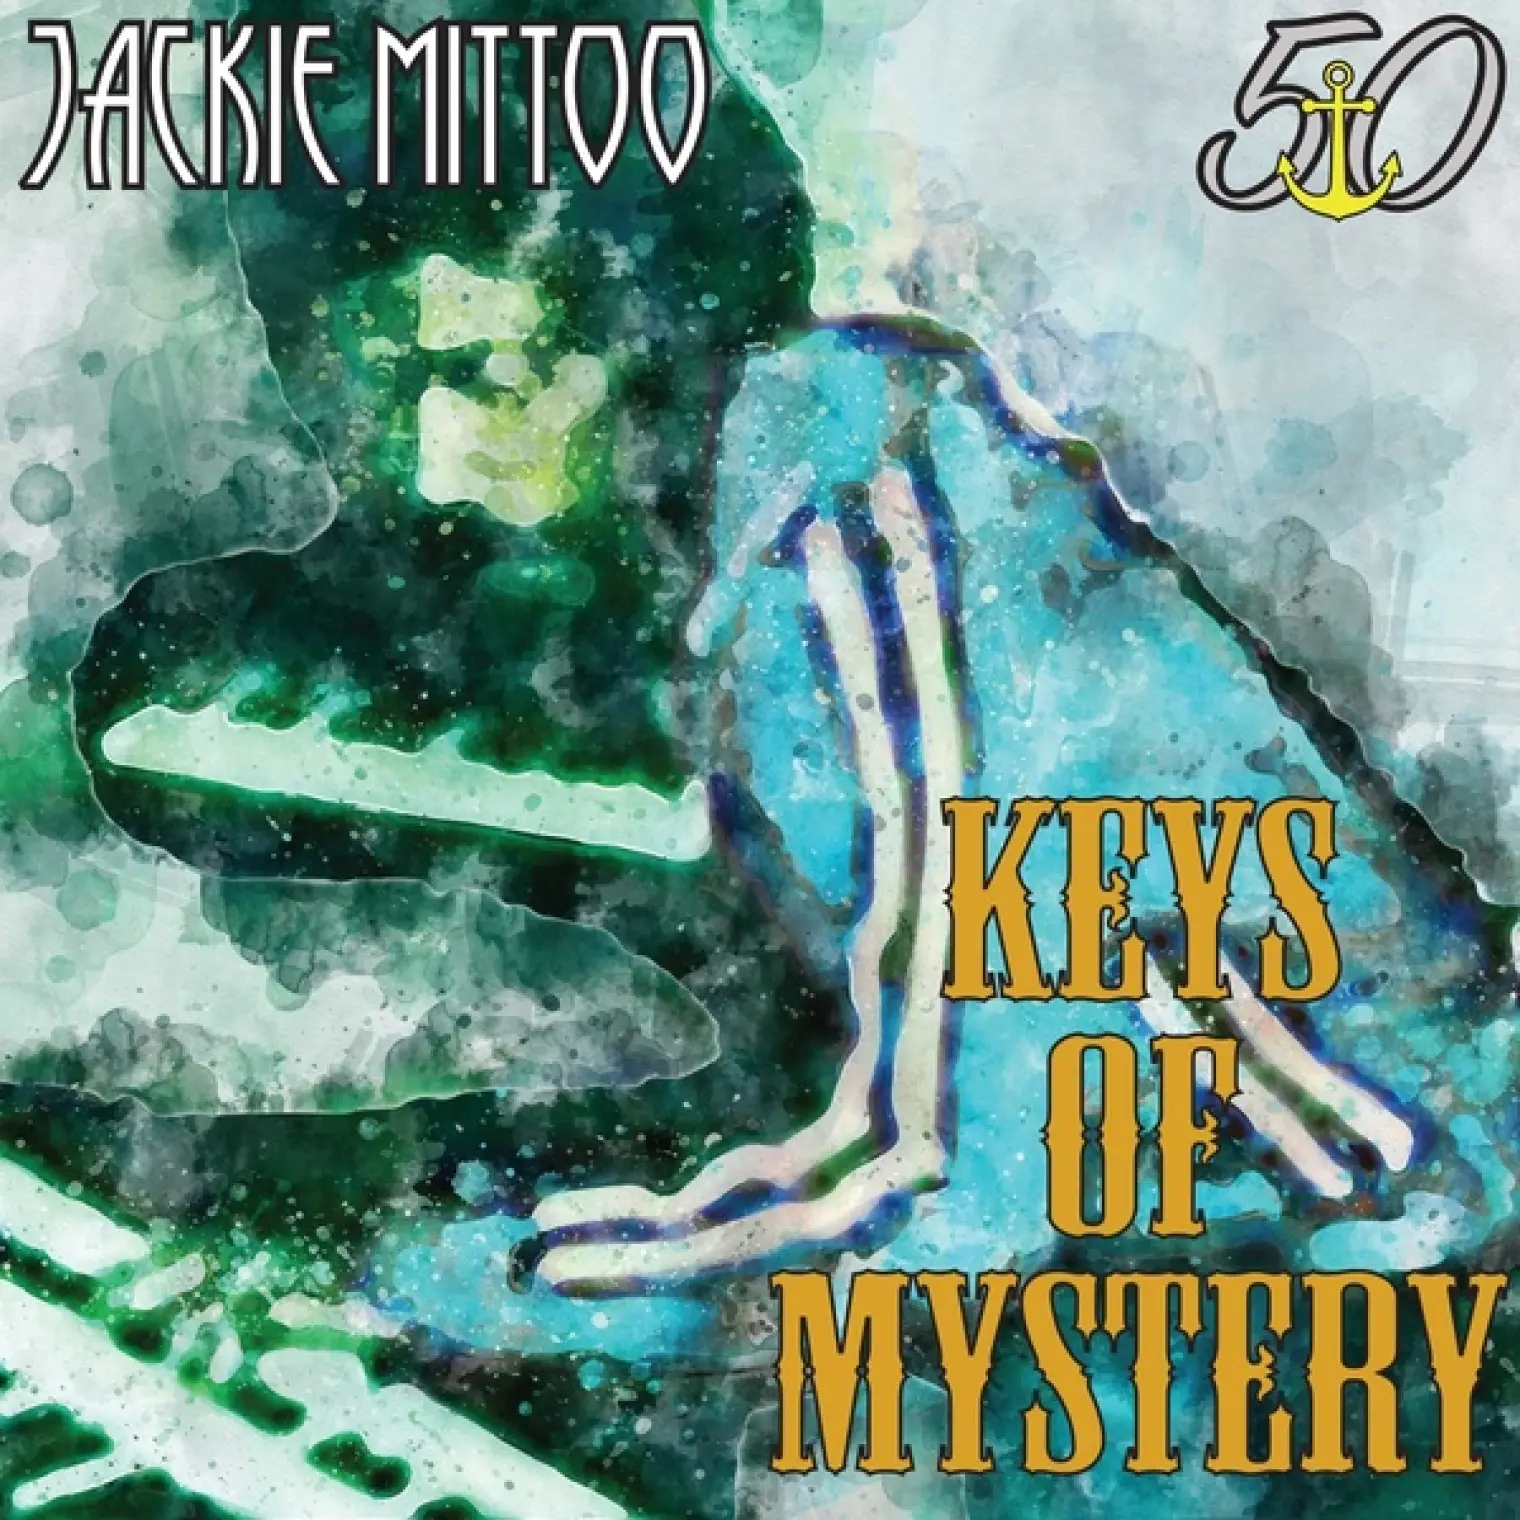 Keys of Mystery (Bunny 'Striker' Lee 50th Anniversary Edition) -  Jackie Mittoo 